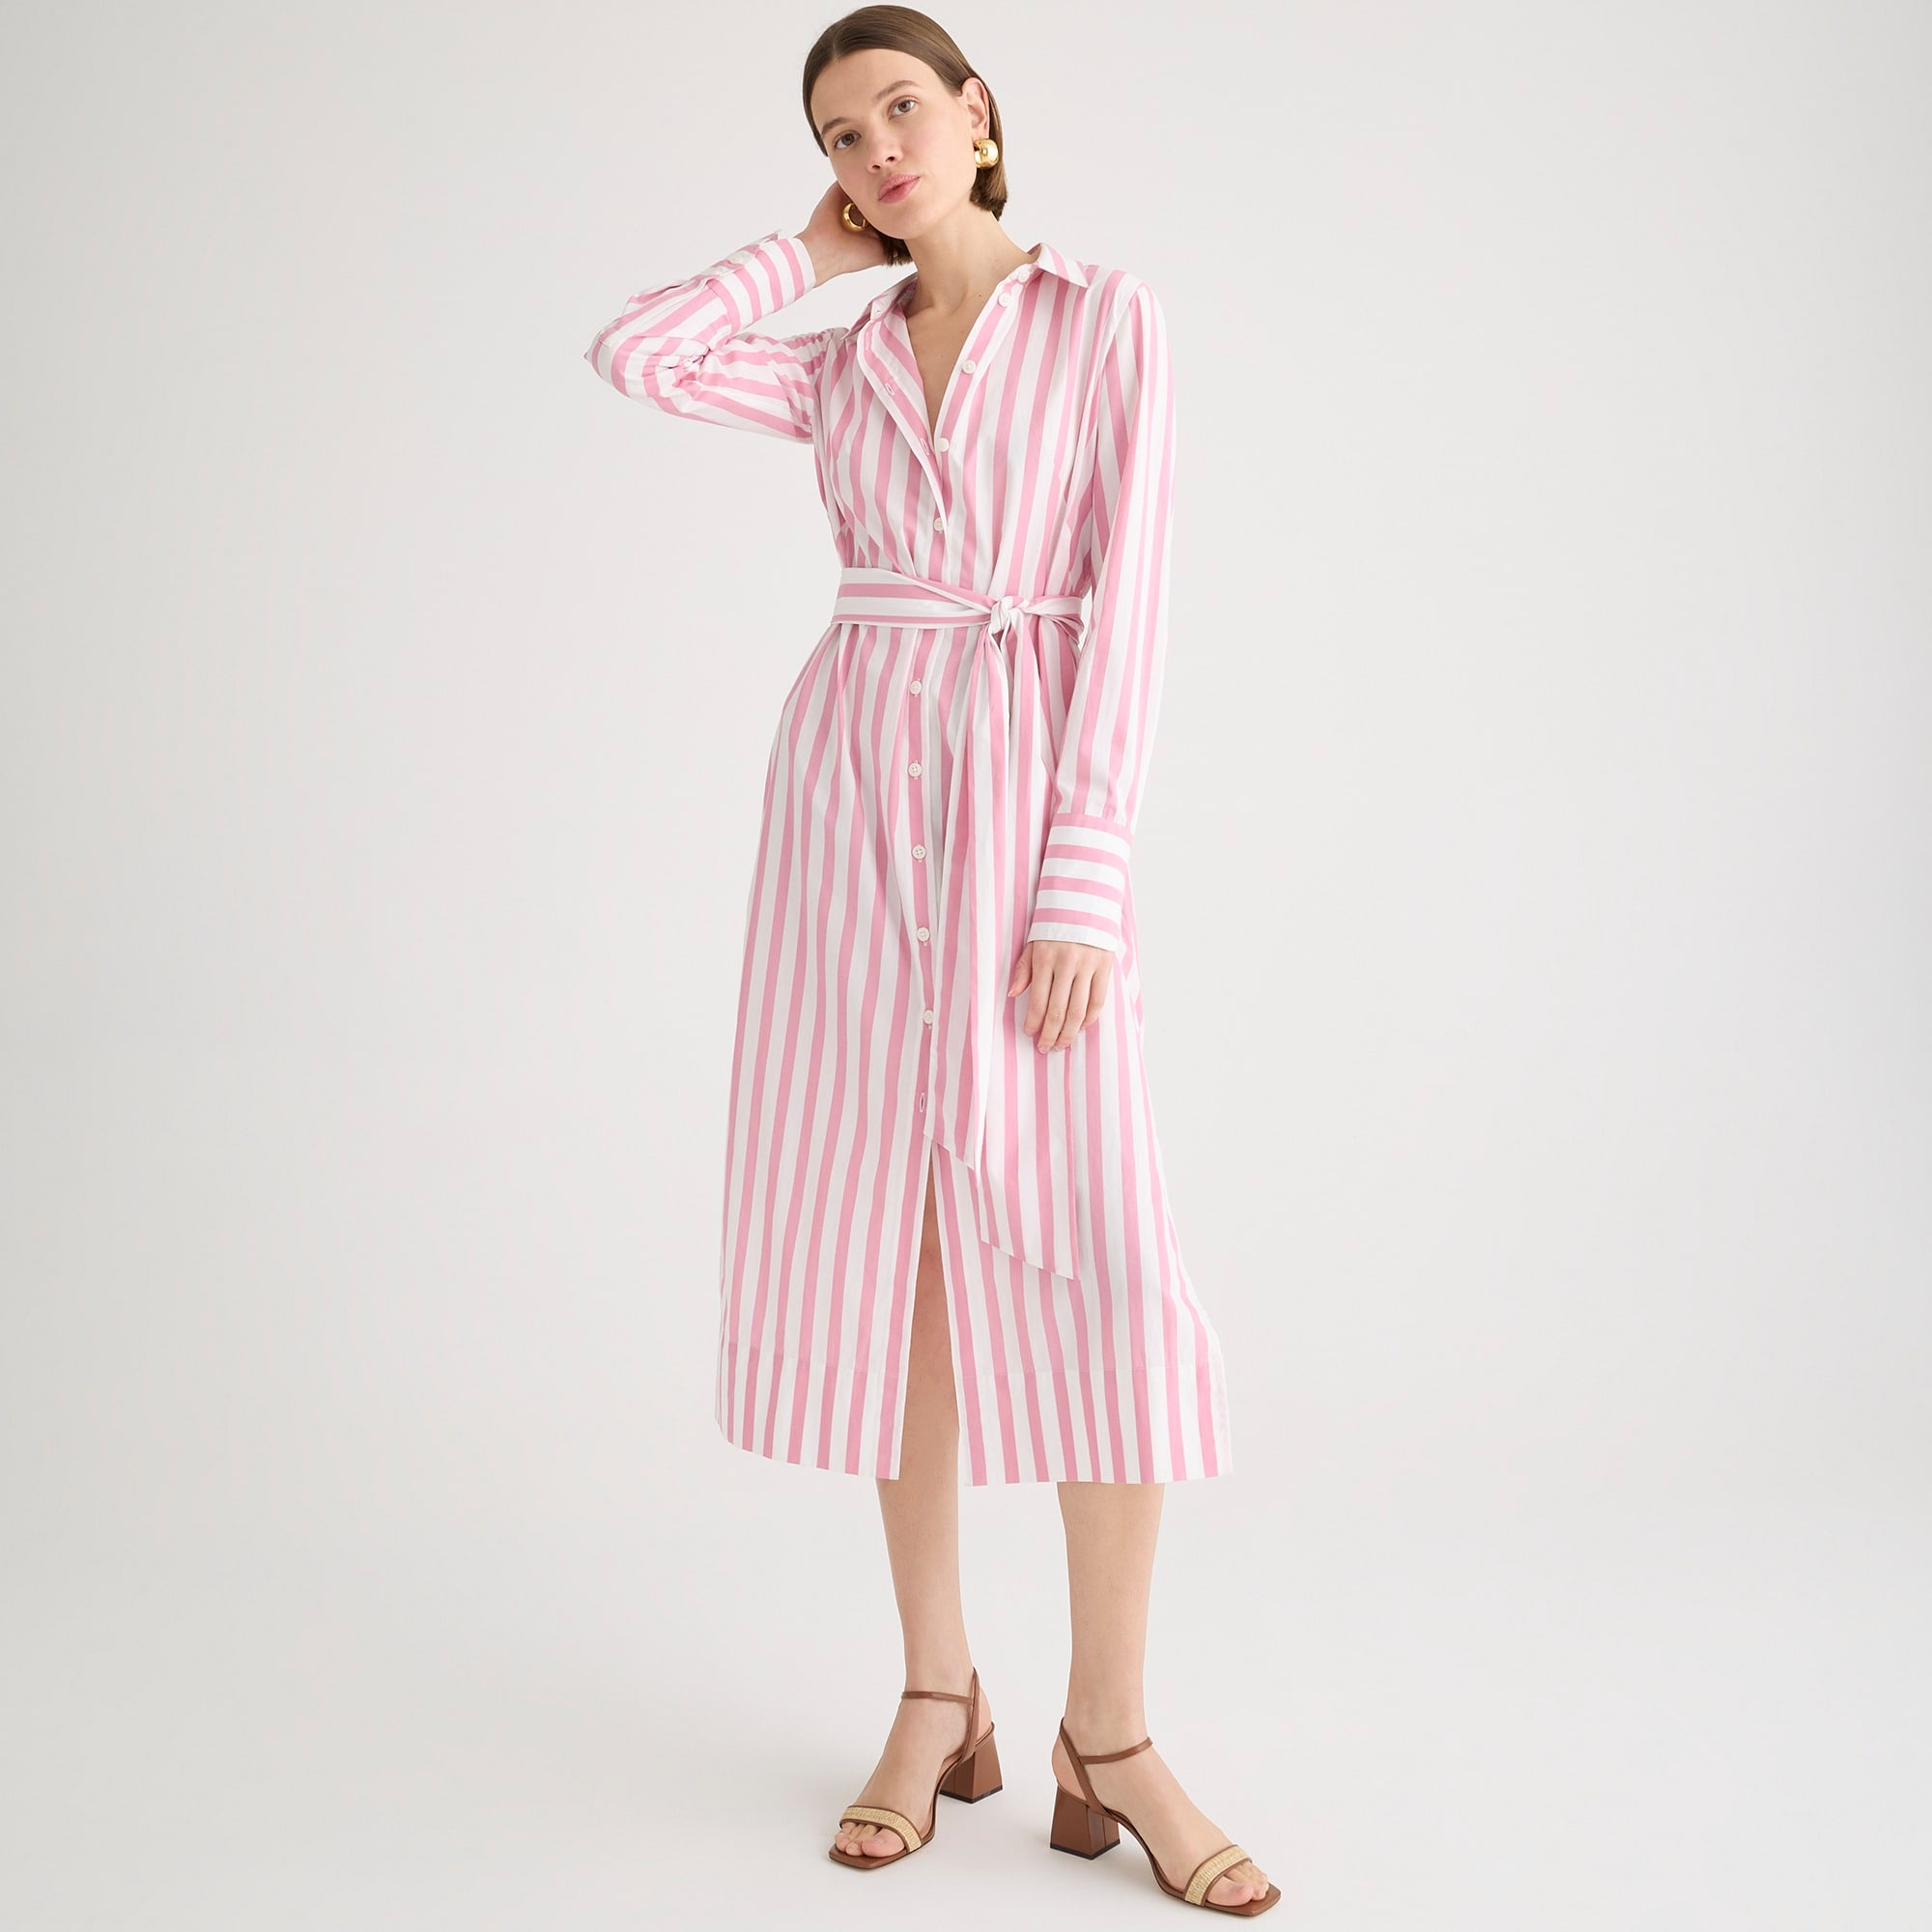  Long-sleeve button-up shirtdress in pink striped poplin